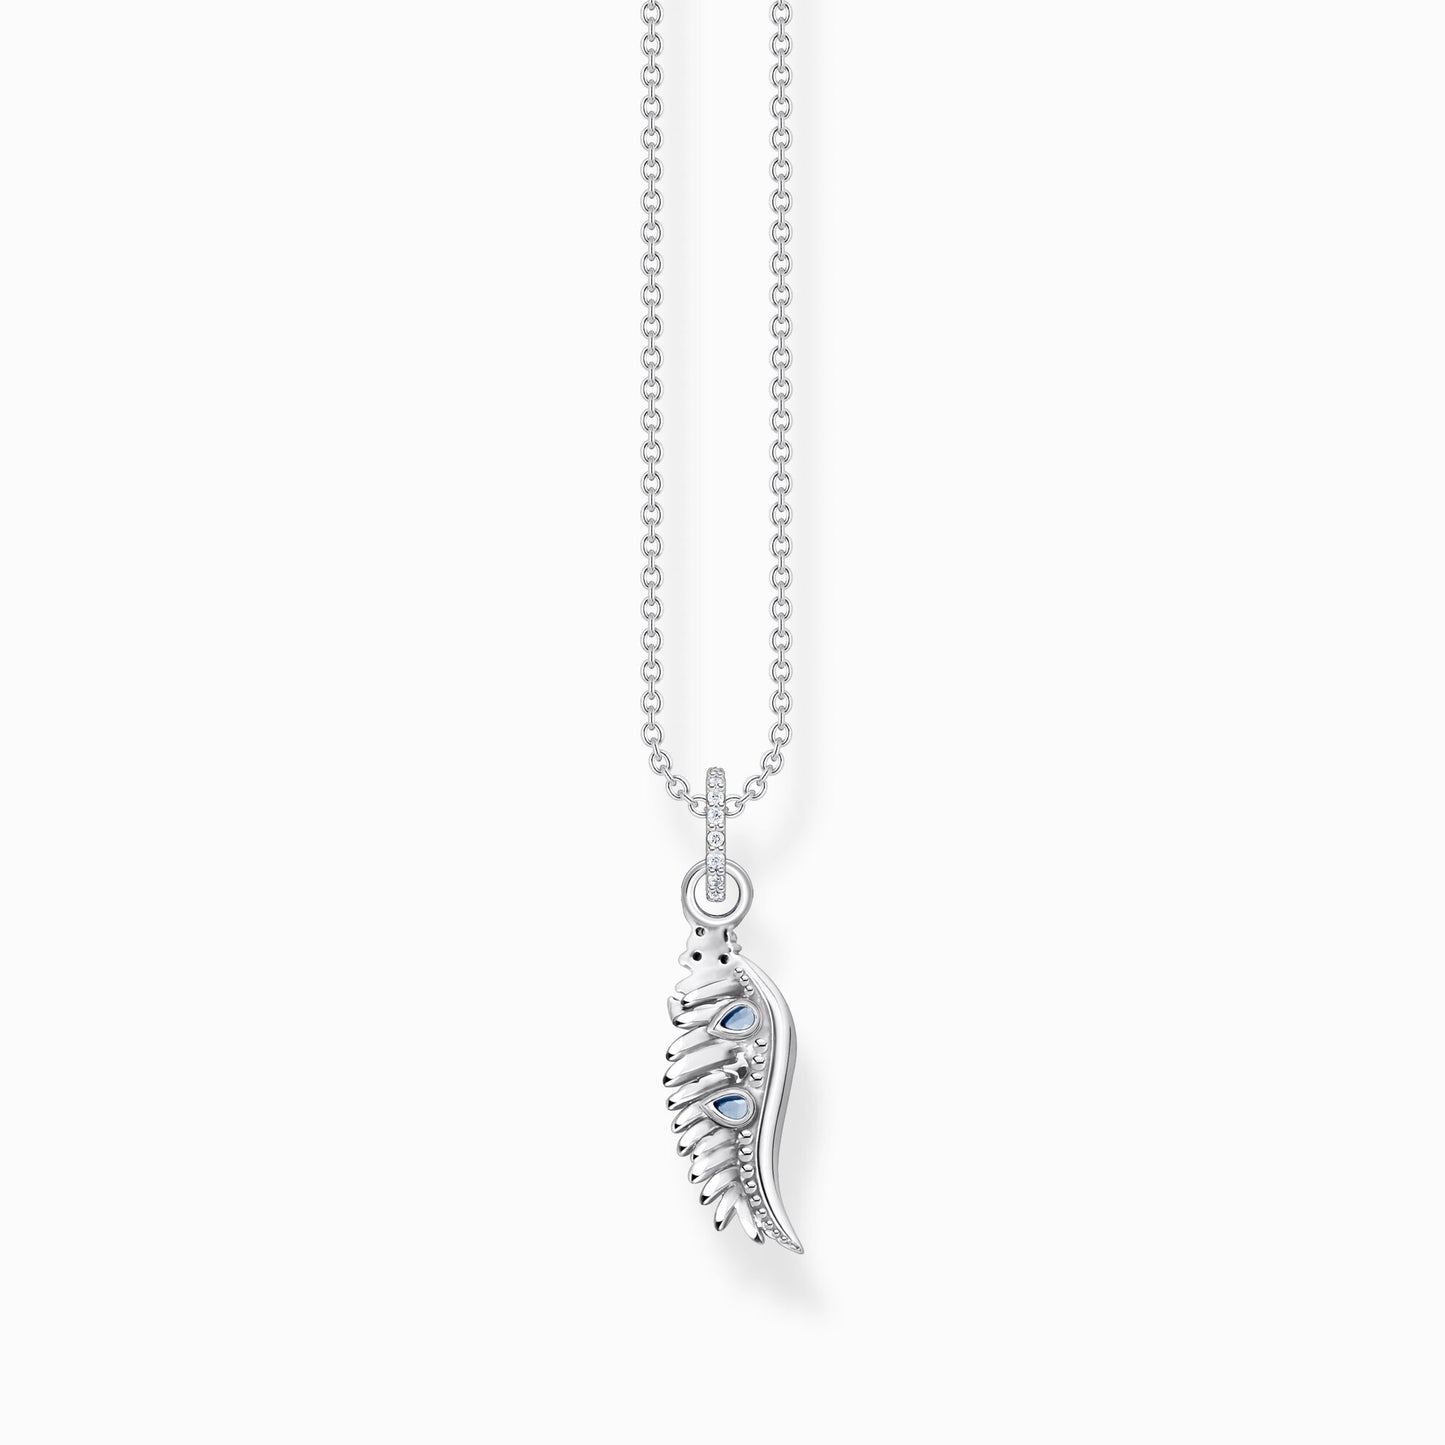 Necklace phoenix wing with blue stones silver KE2168-644-1-L45V